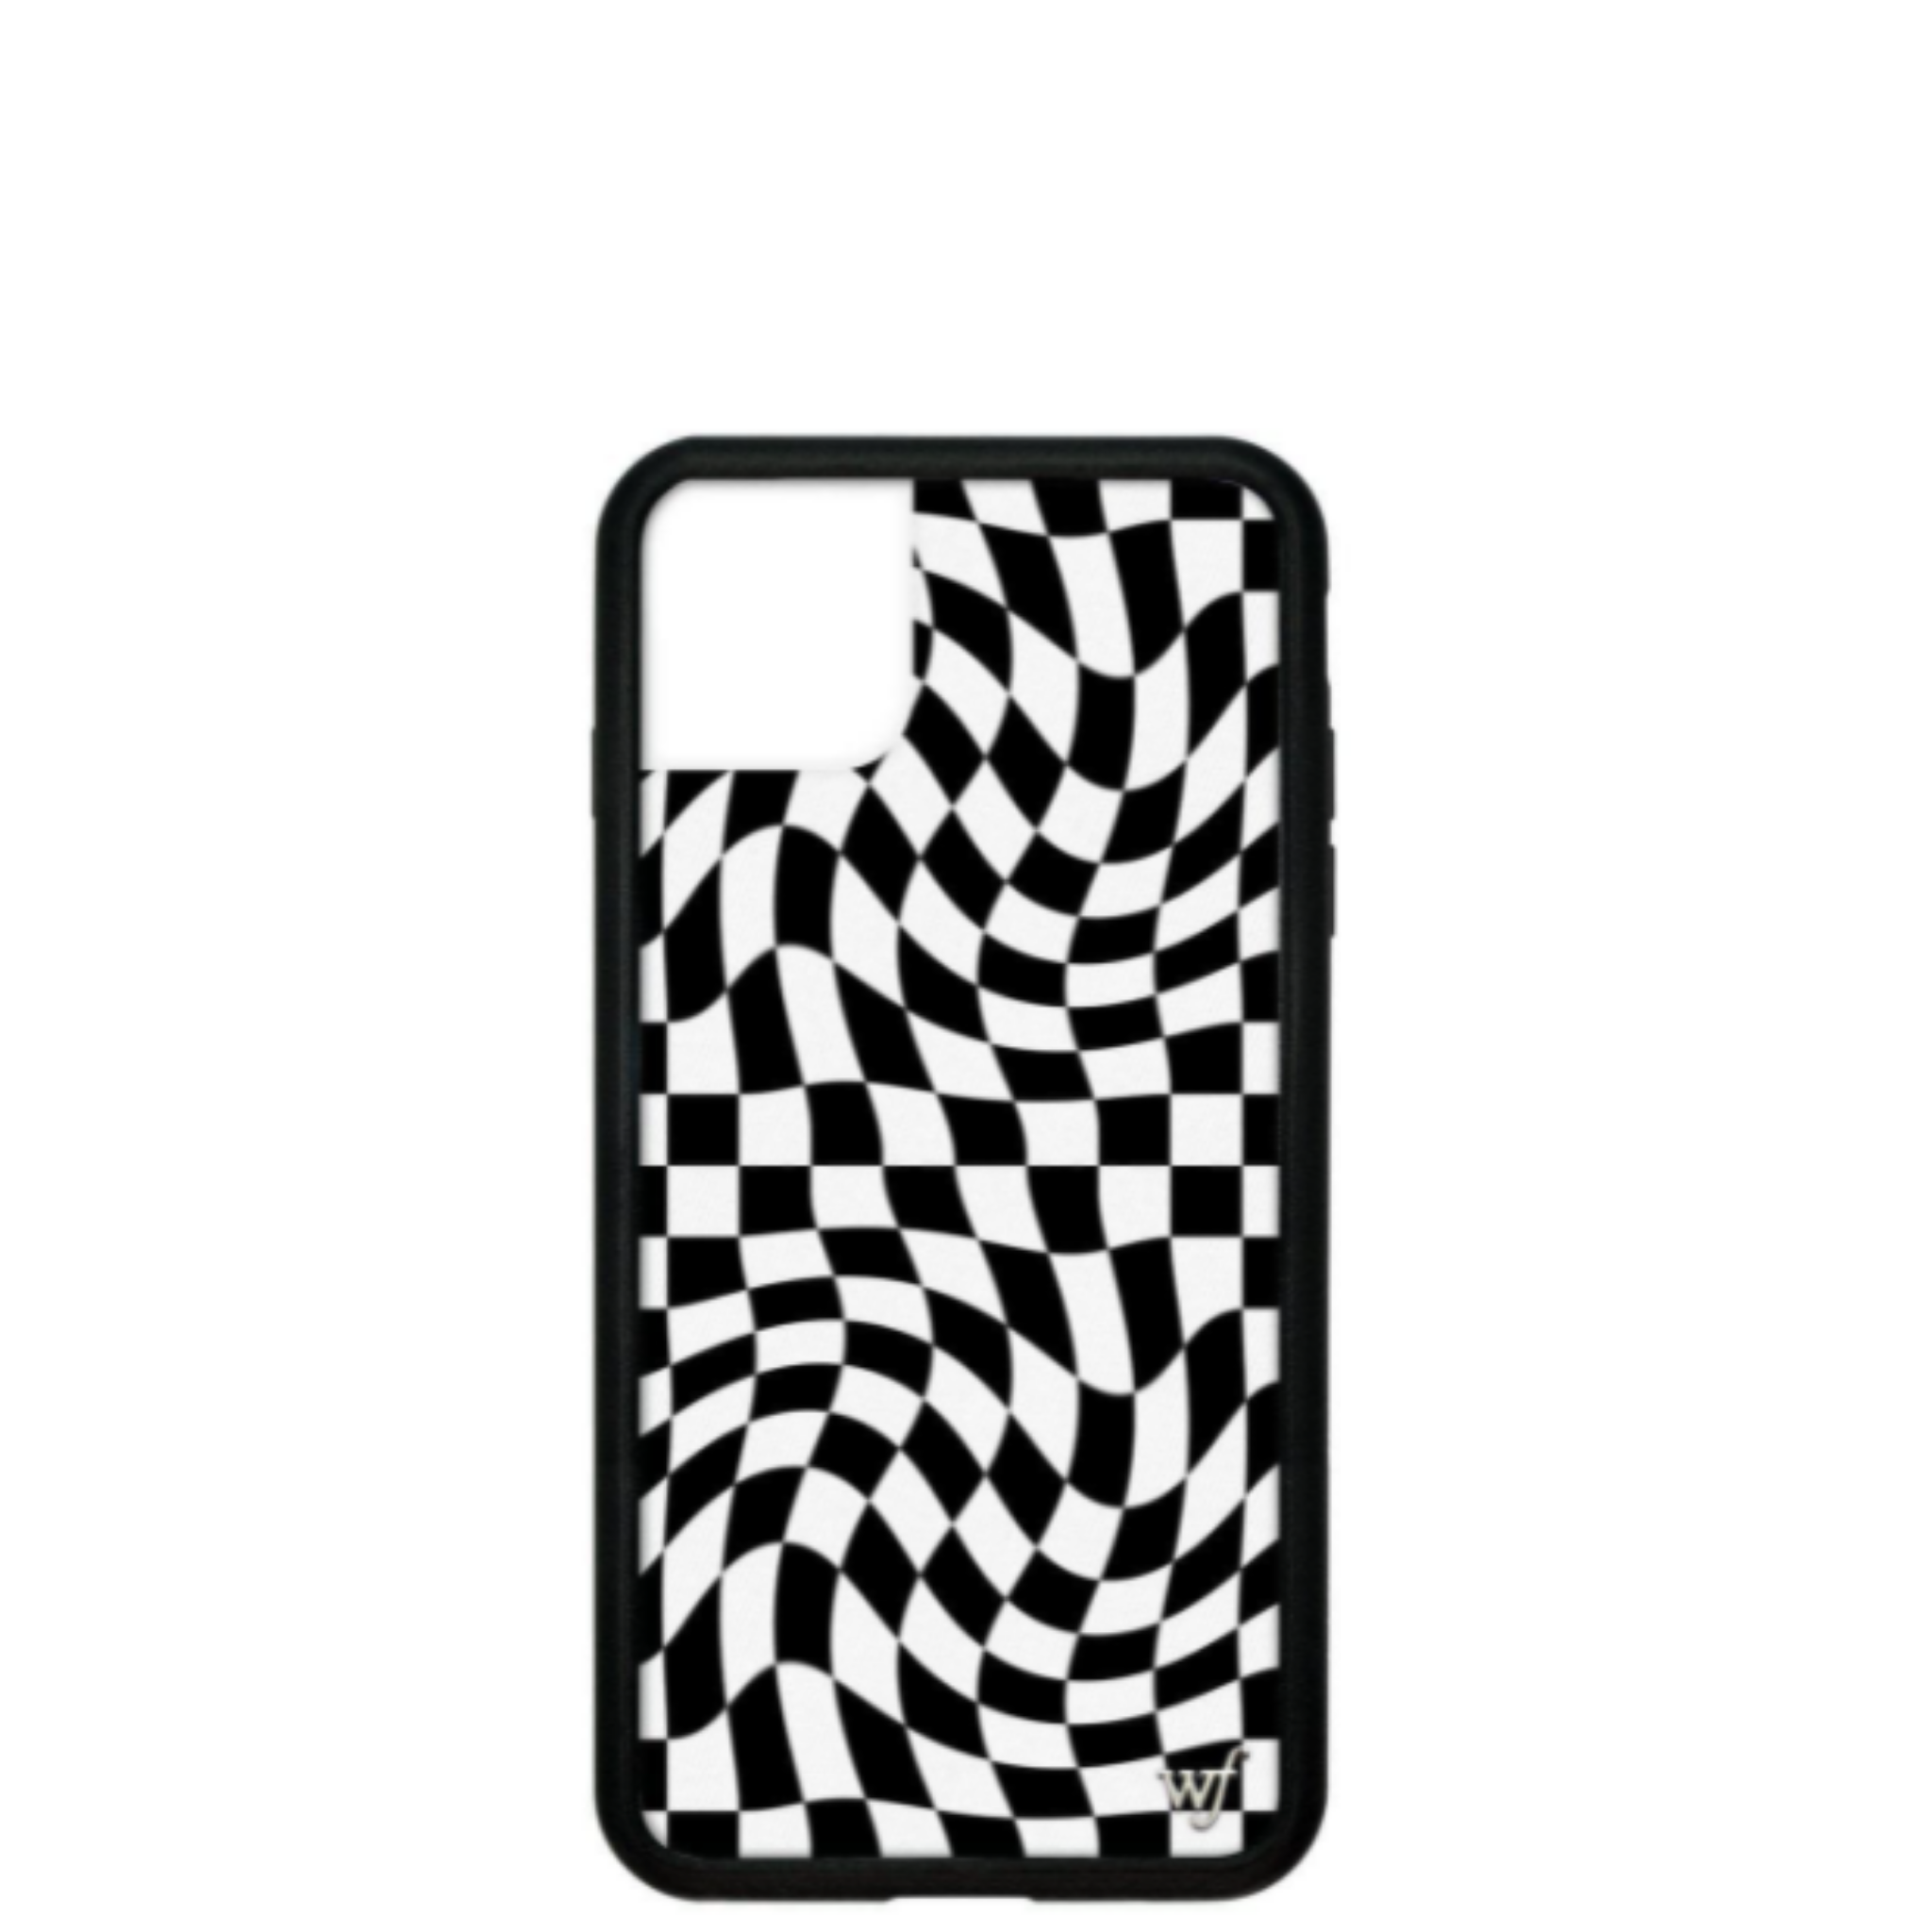 Crazy Checkers iPhone 11 Pro Max Case